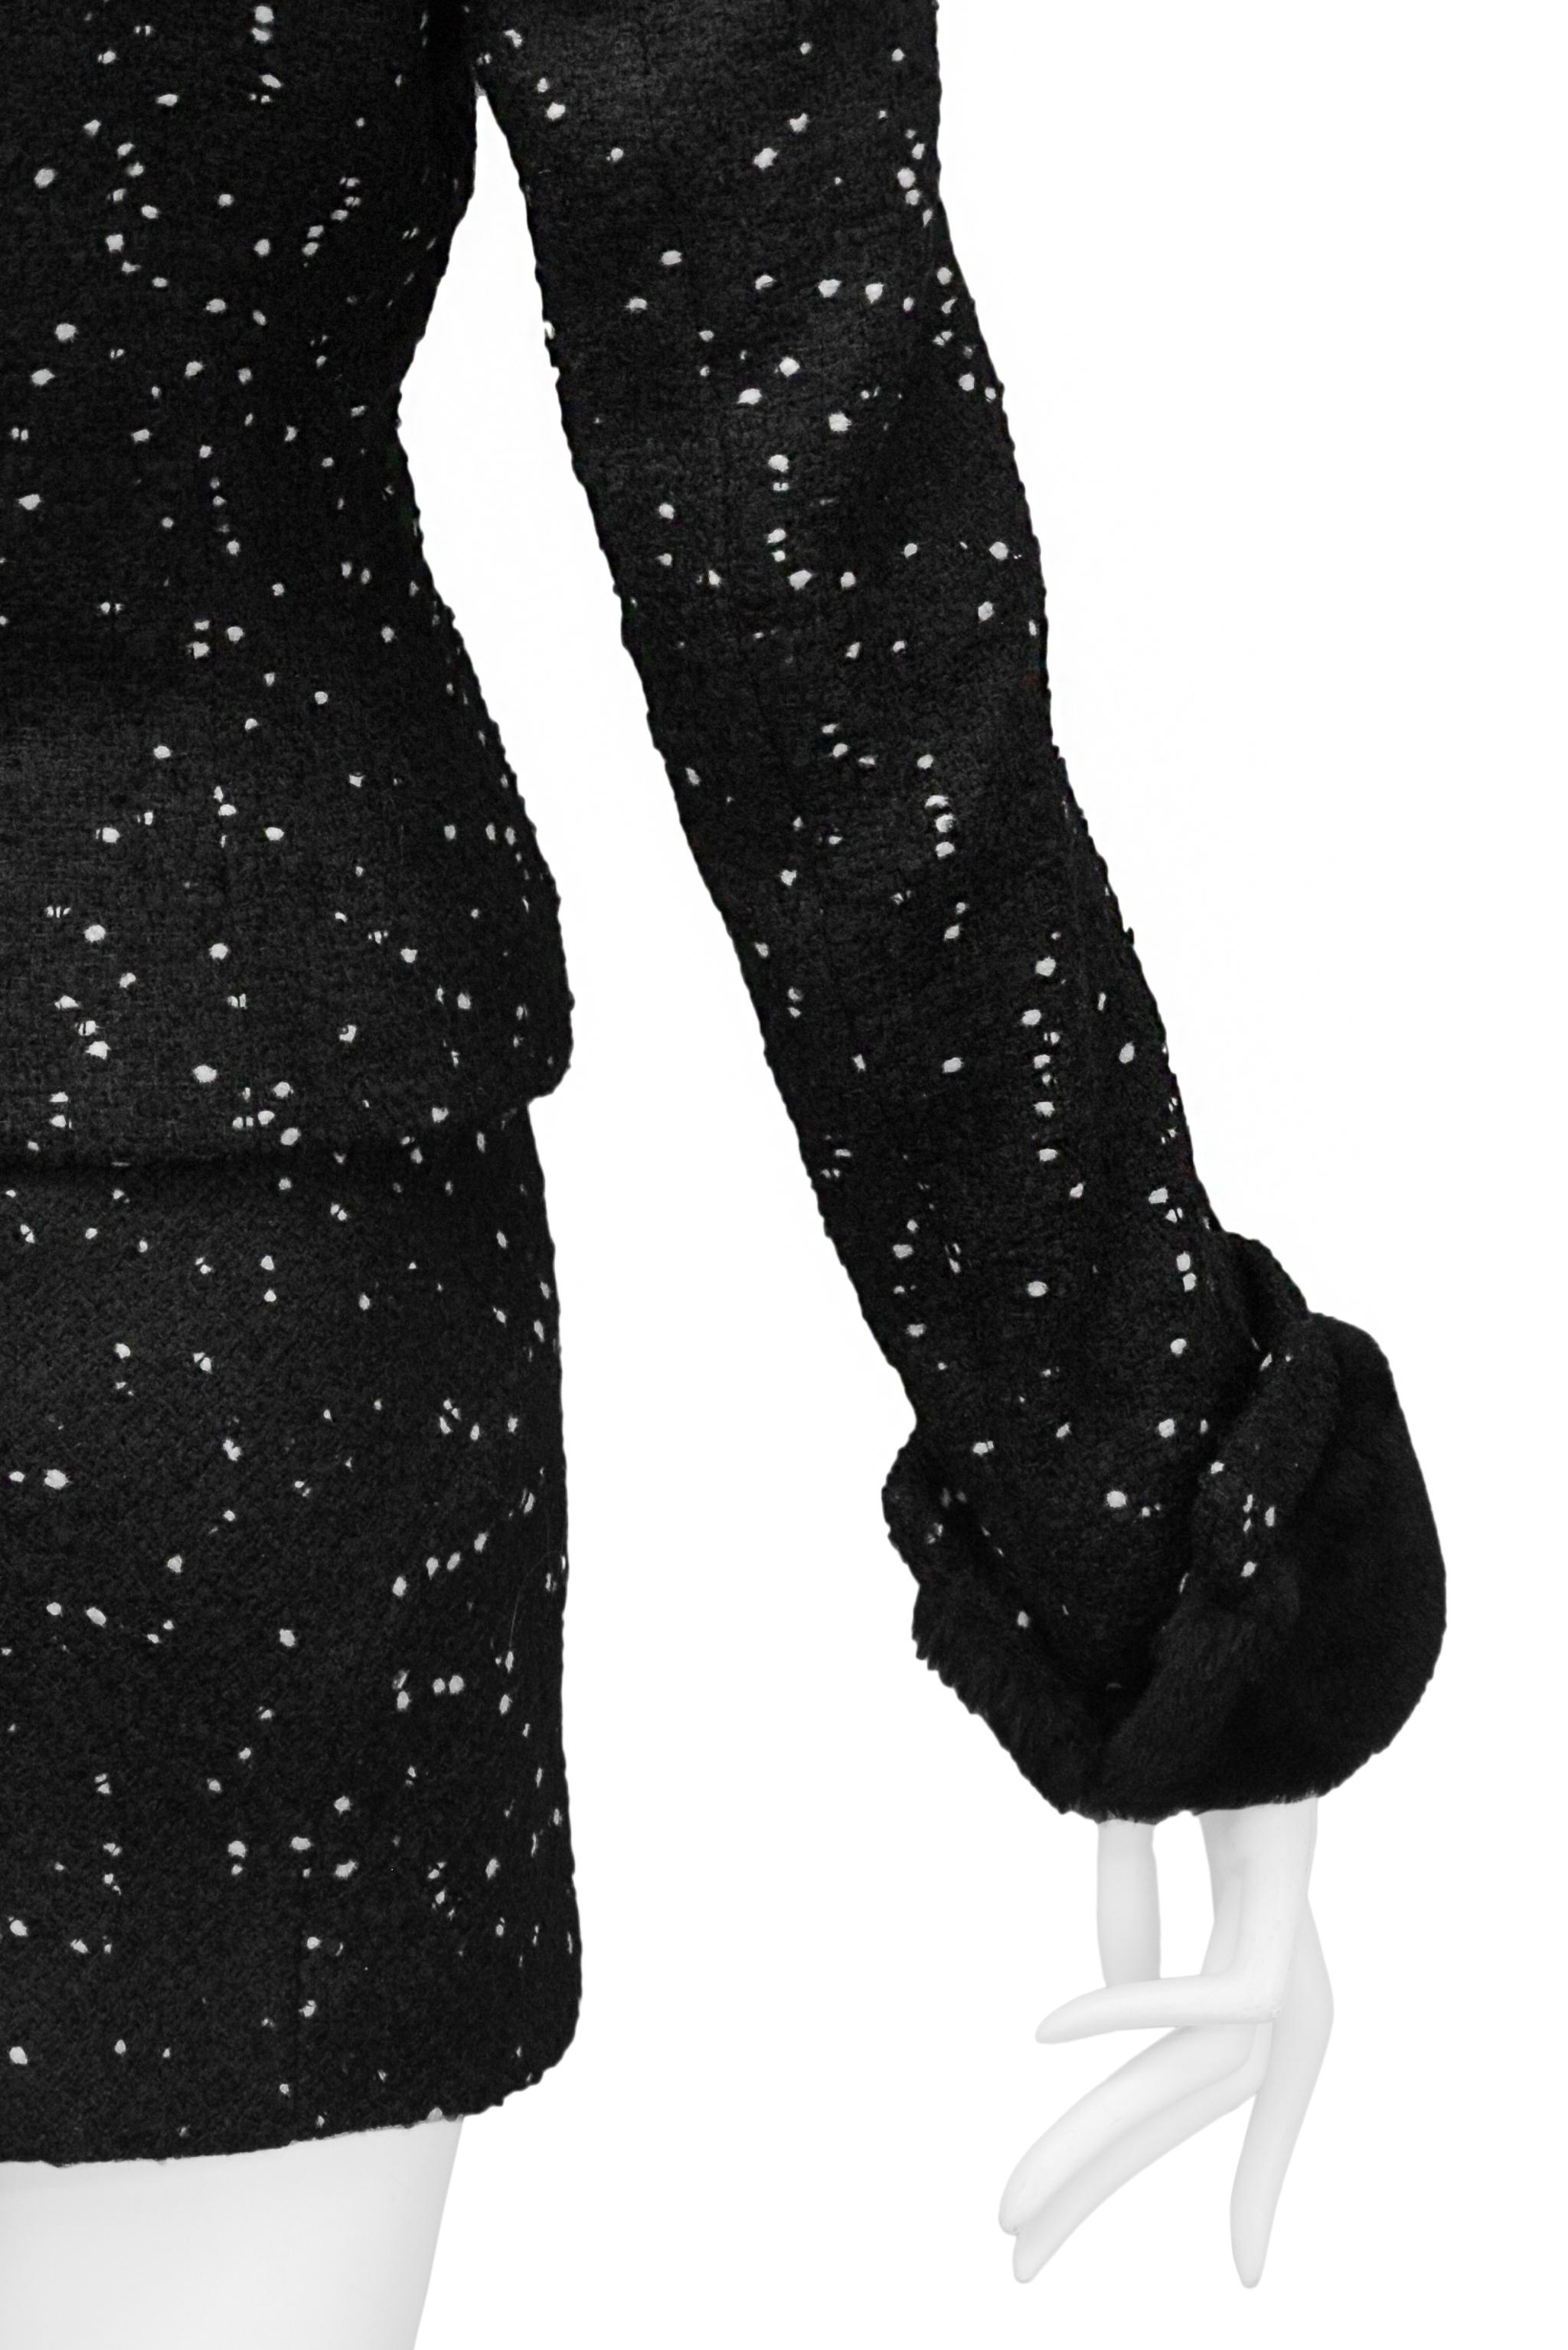 John Galliano Black & White Snowstorm Stitch Jacket And Skirt 1996 2